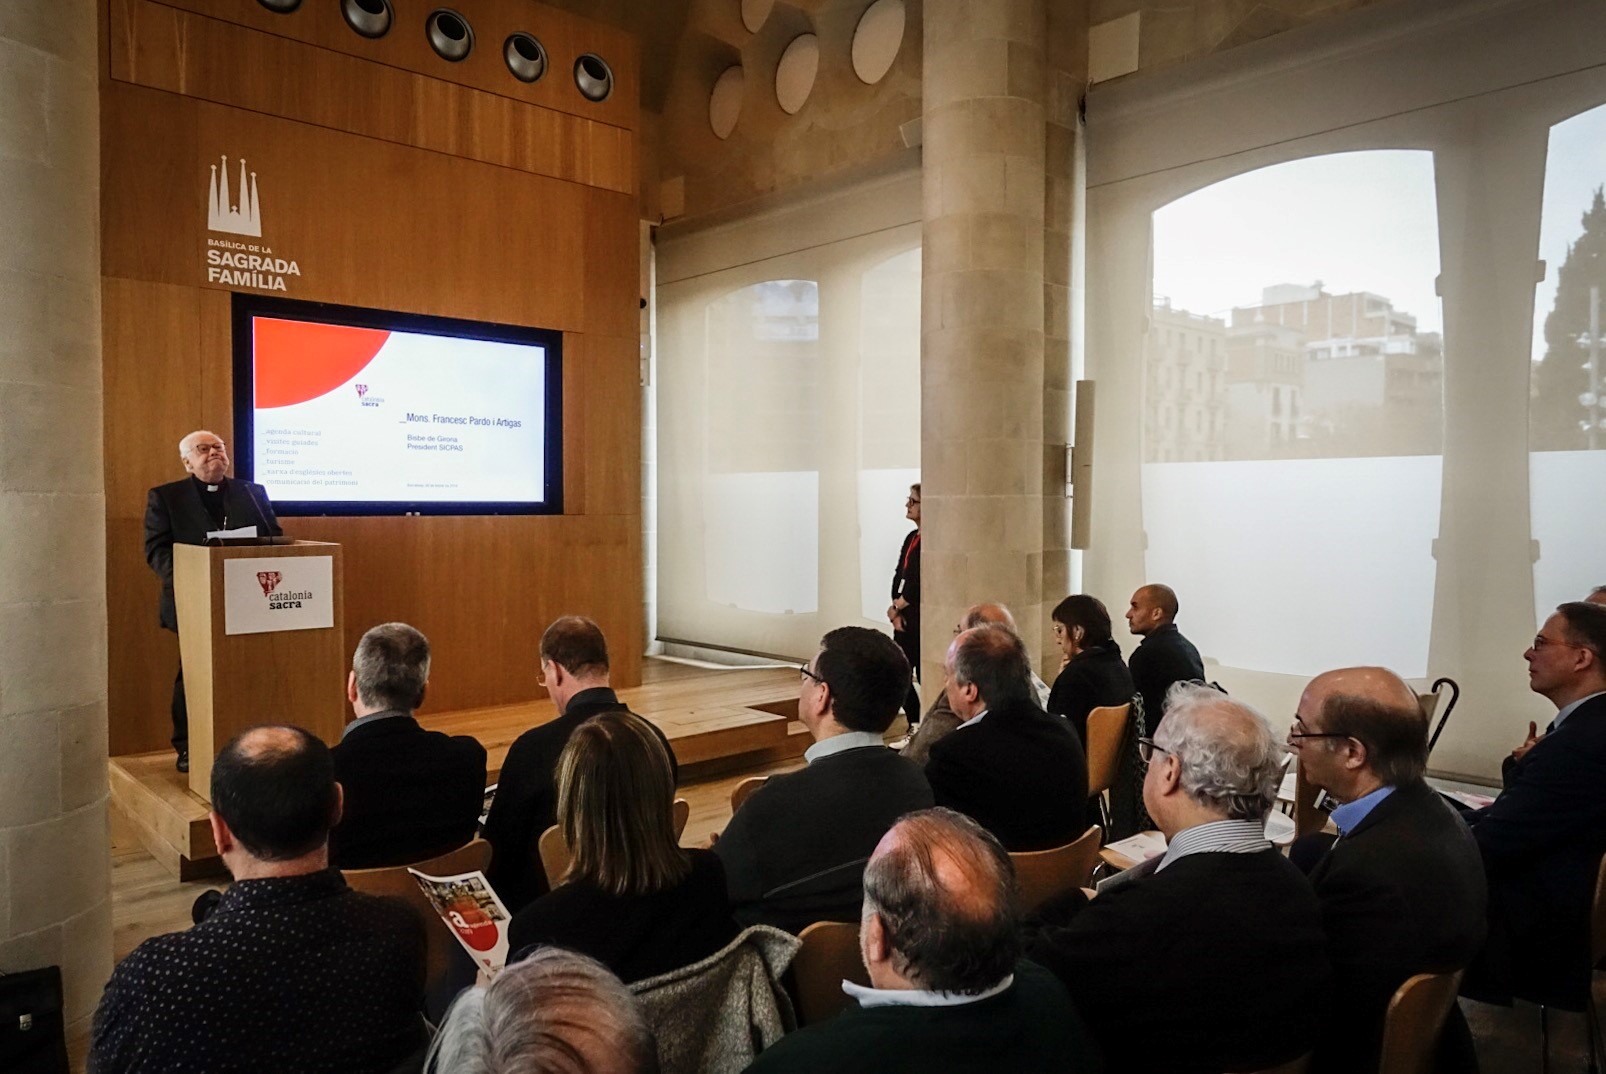 The Sagrada Família hosted the launch of the Catalonia Sacra agenda